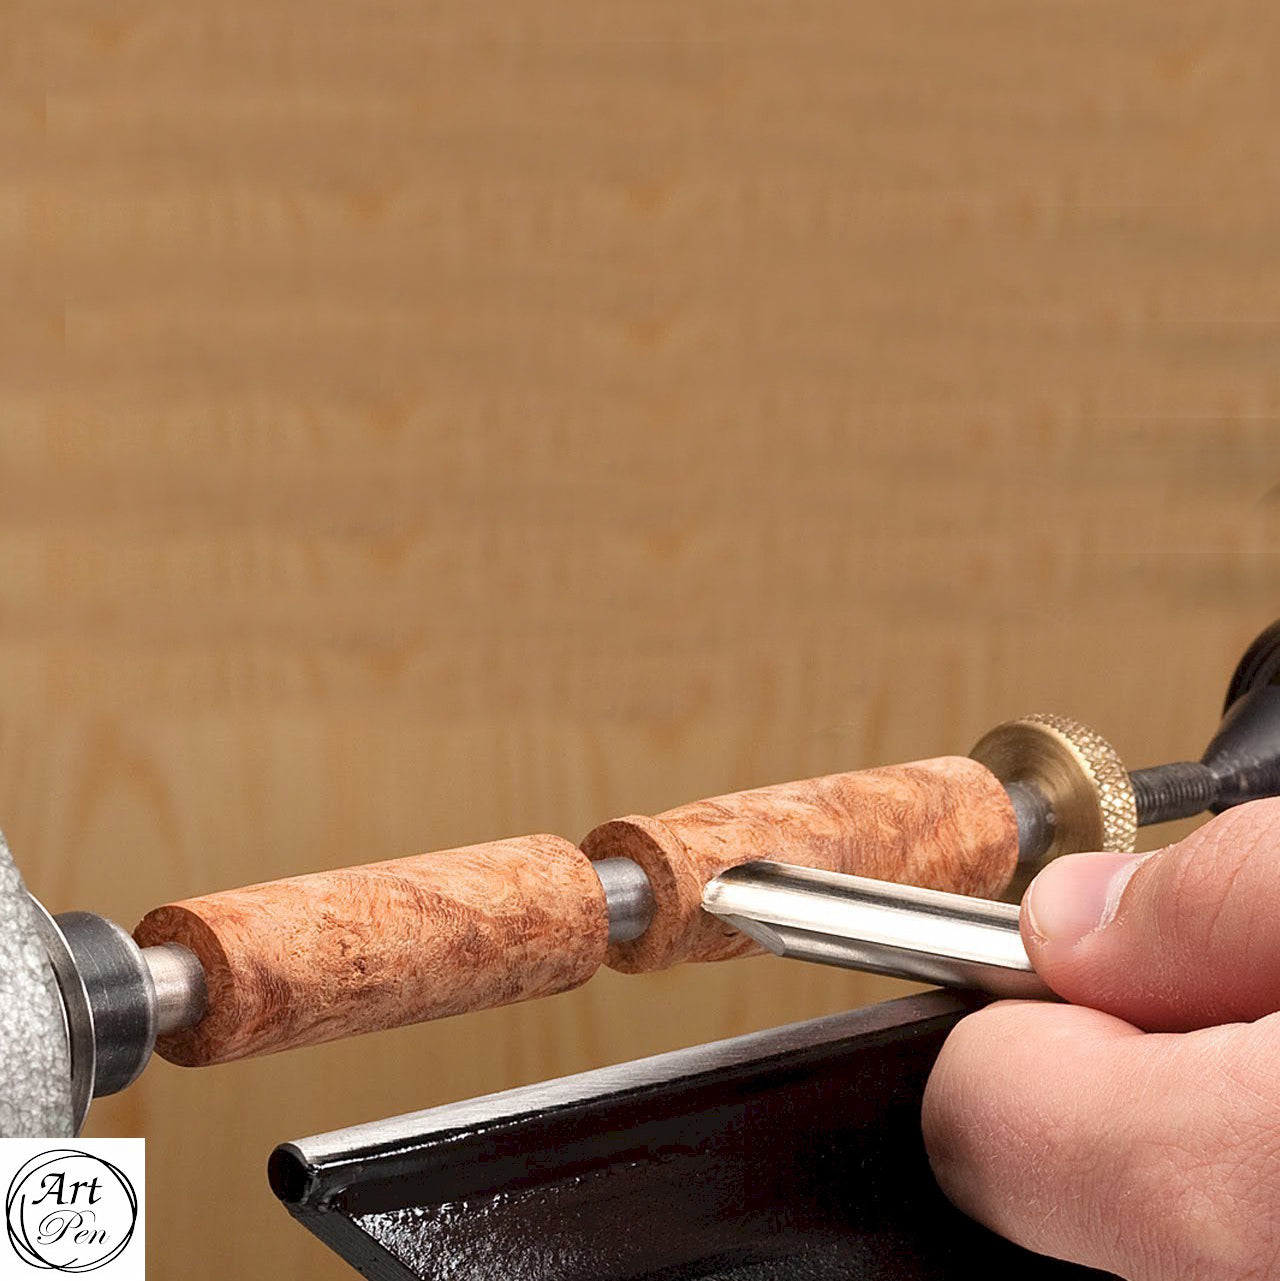 ART-PEN: Handcrafted Luxury Twist Pen - Deruta Perugino - Ant. Brass with Black body. - Artistica.com